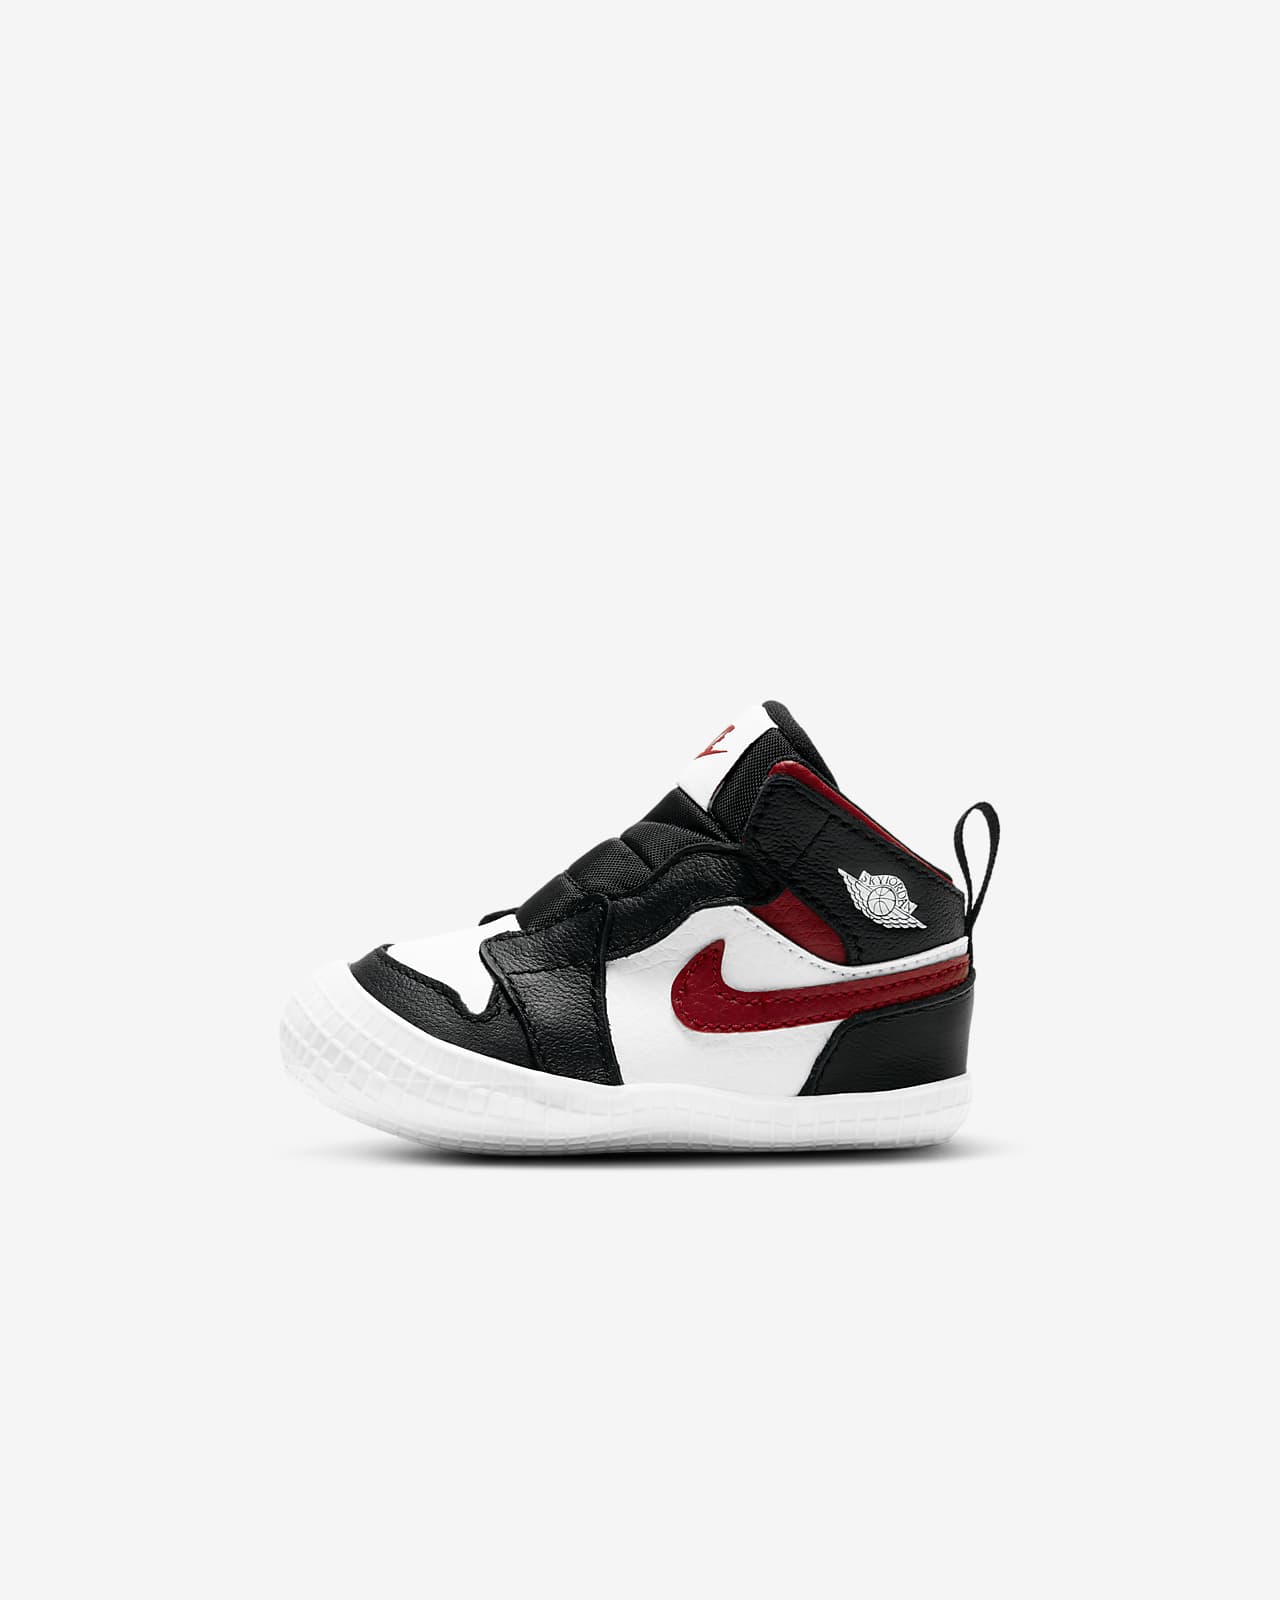 Jordan 1 Baby Cot Bootie. Nike LU